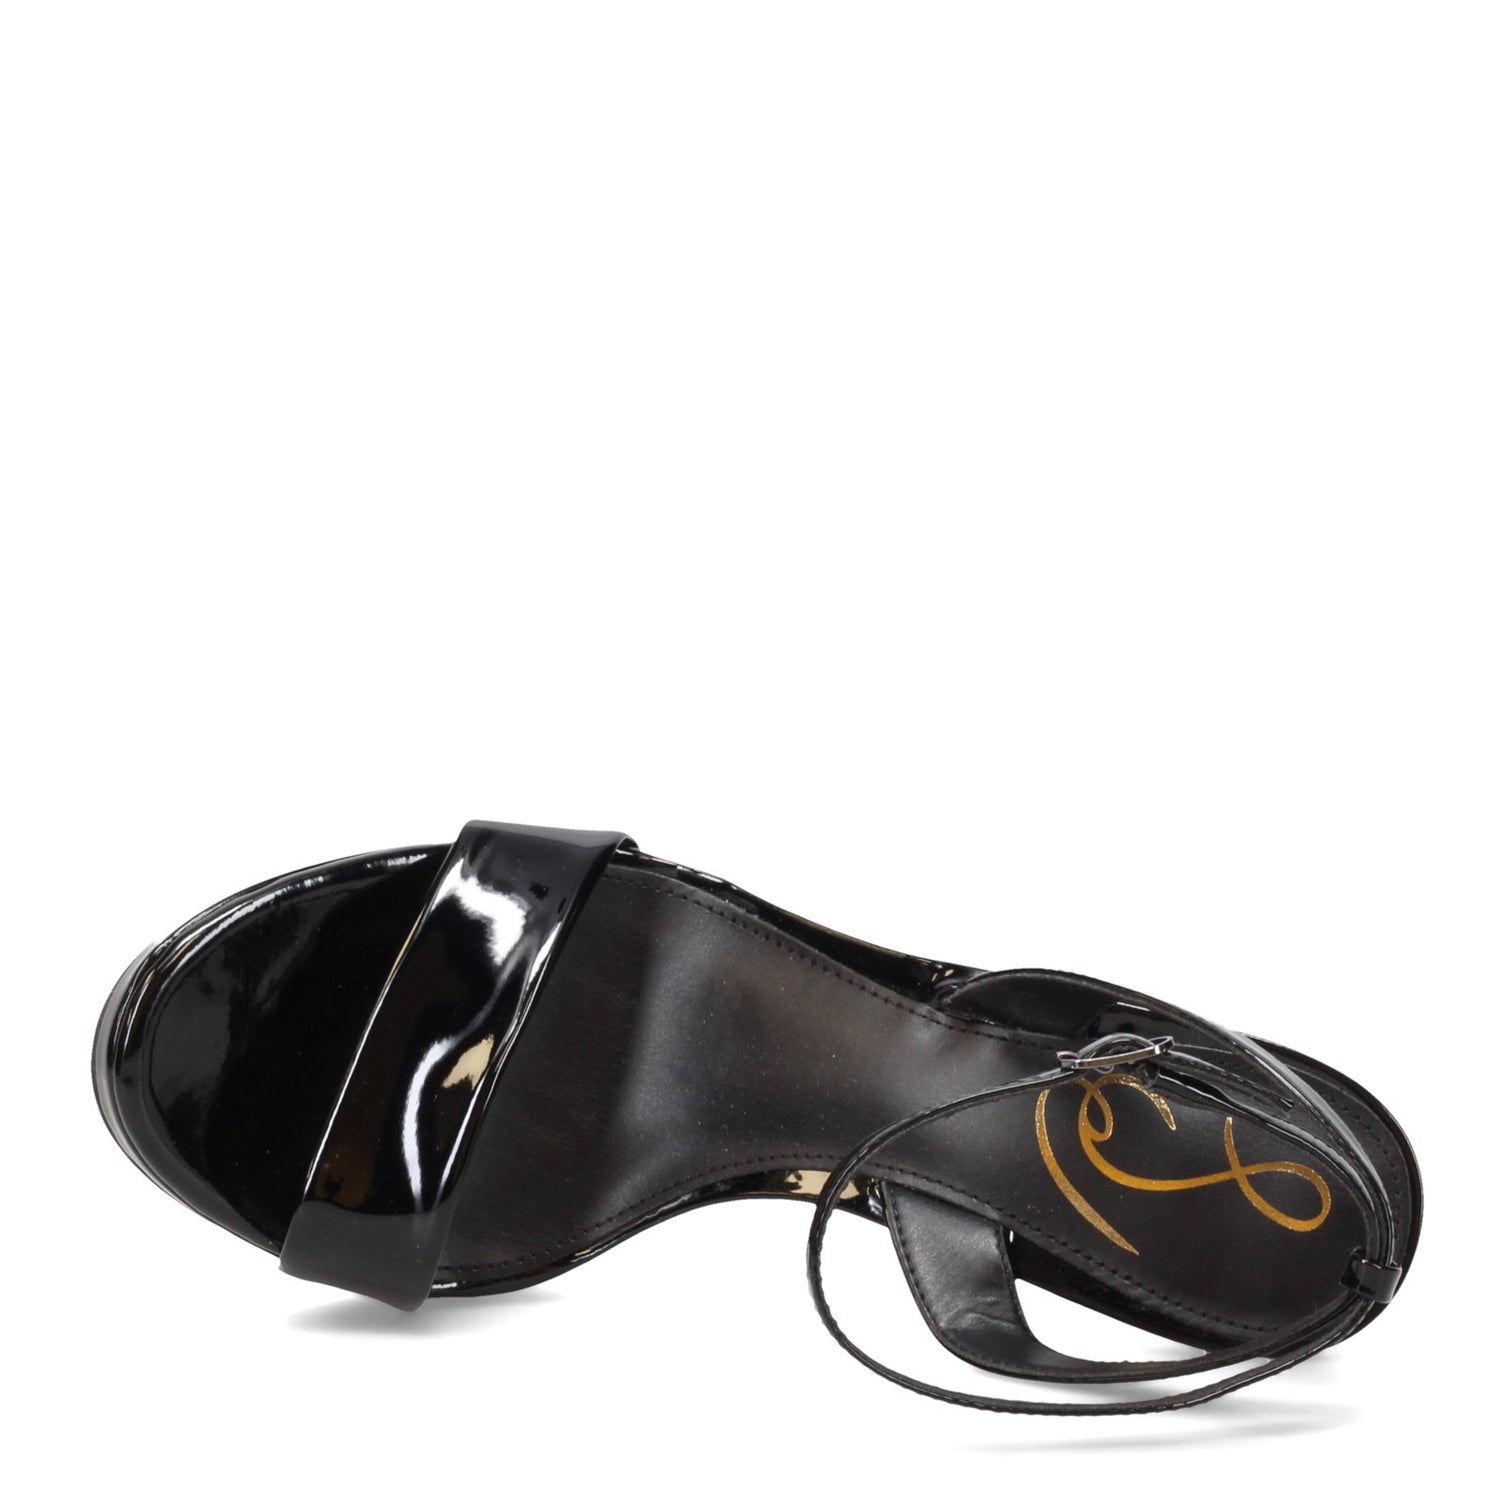 Peltz Shoes  Women's Sam Edelman Jade Sandal BLACK PATENT I0175S1002